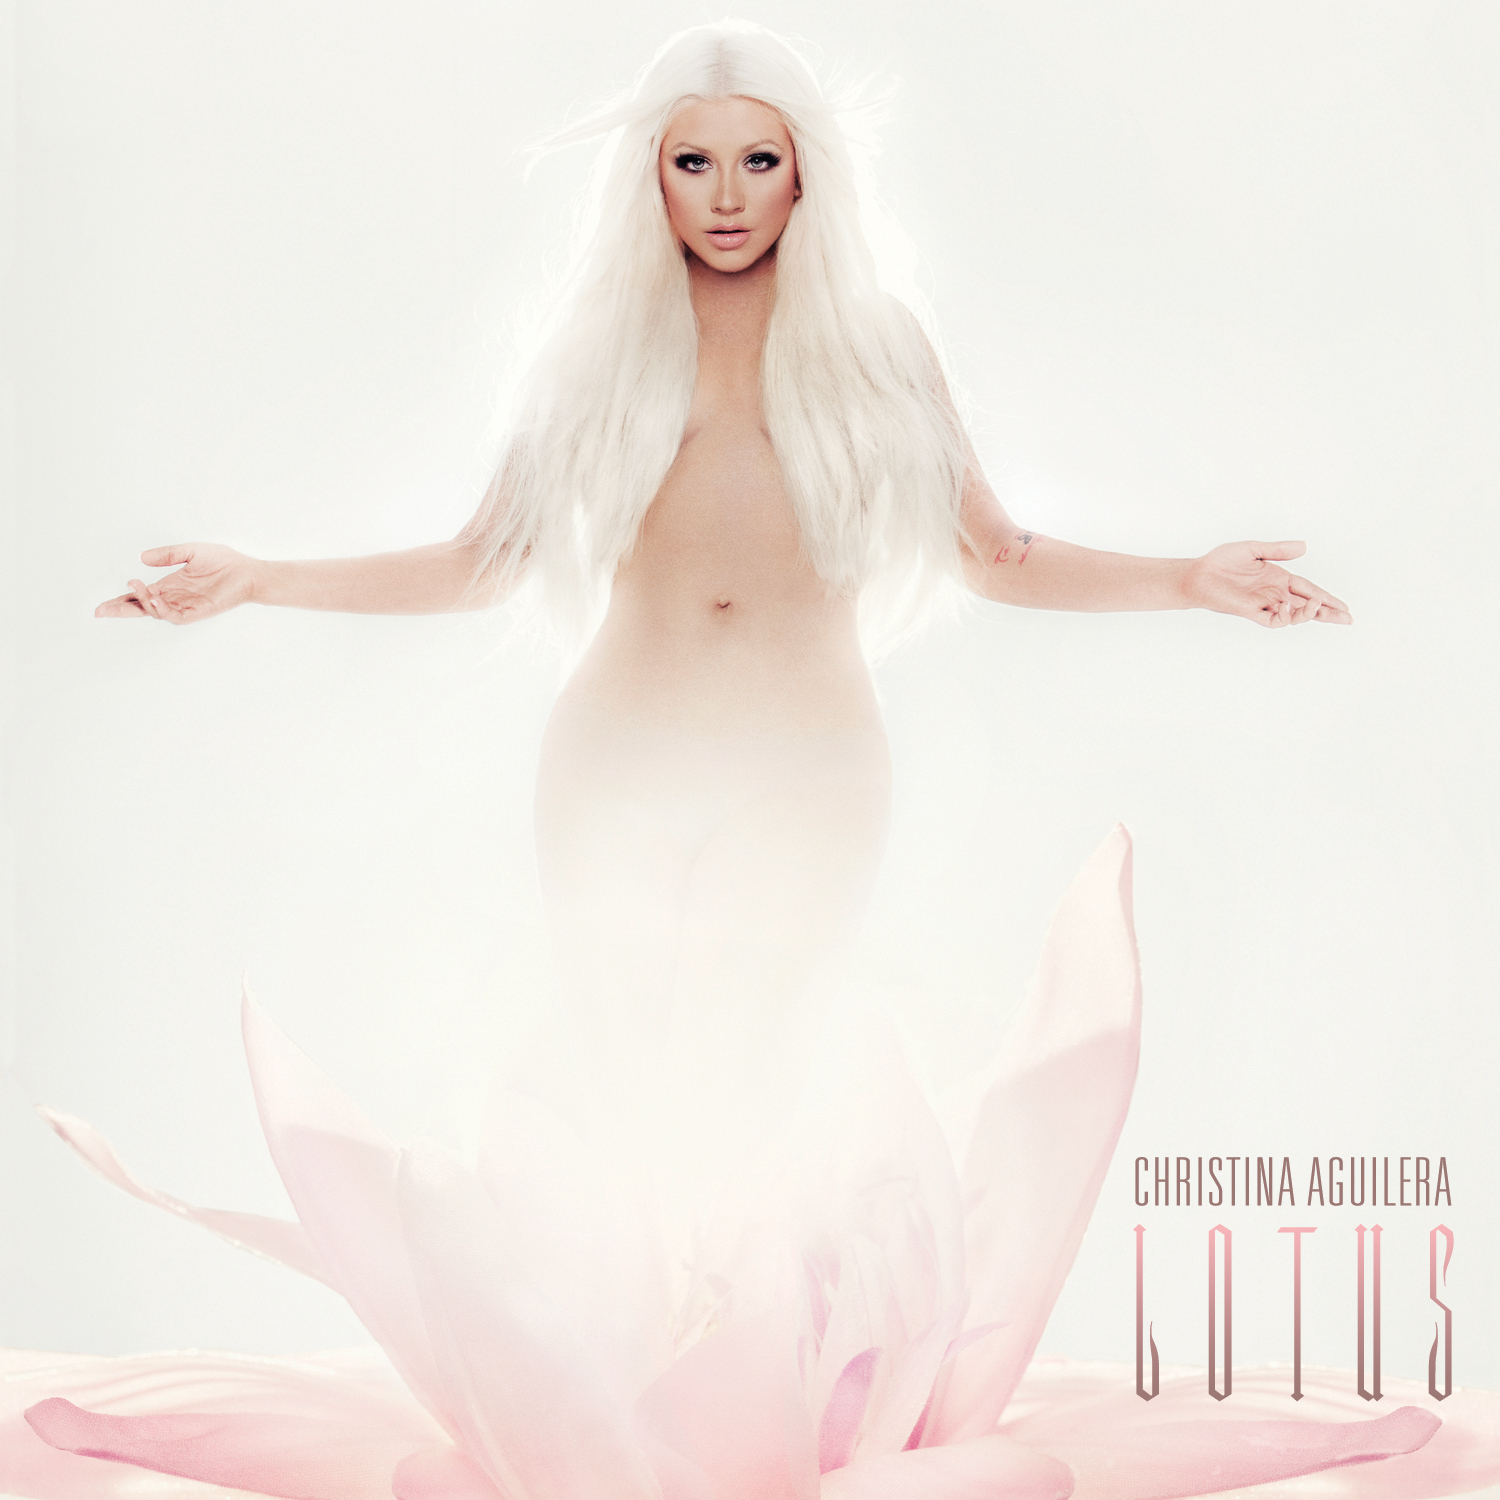 Christina Aguilera "Lotus" (fot. serwis prasowy)